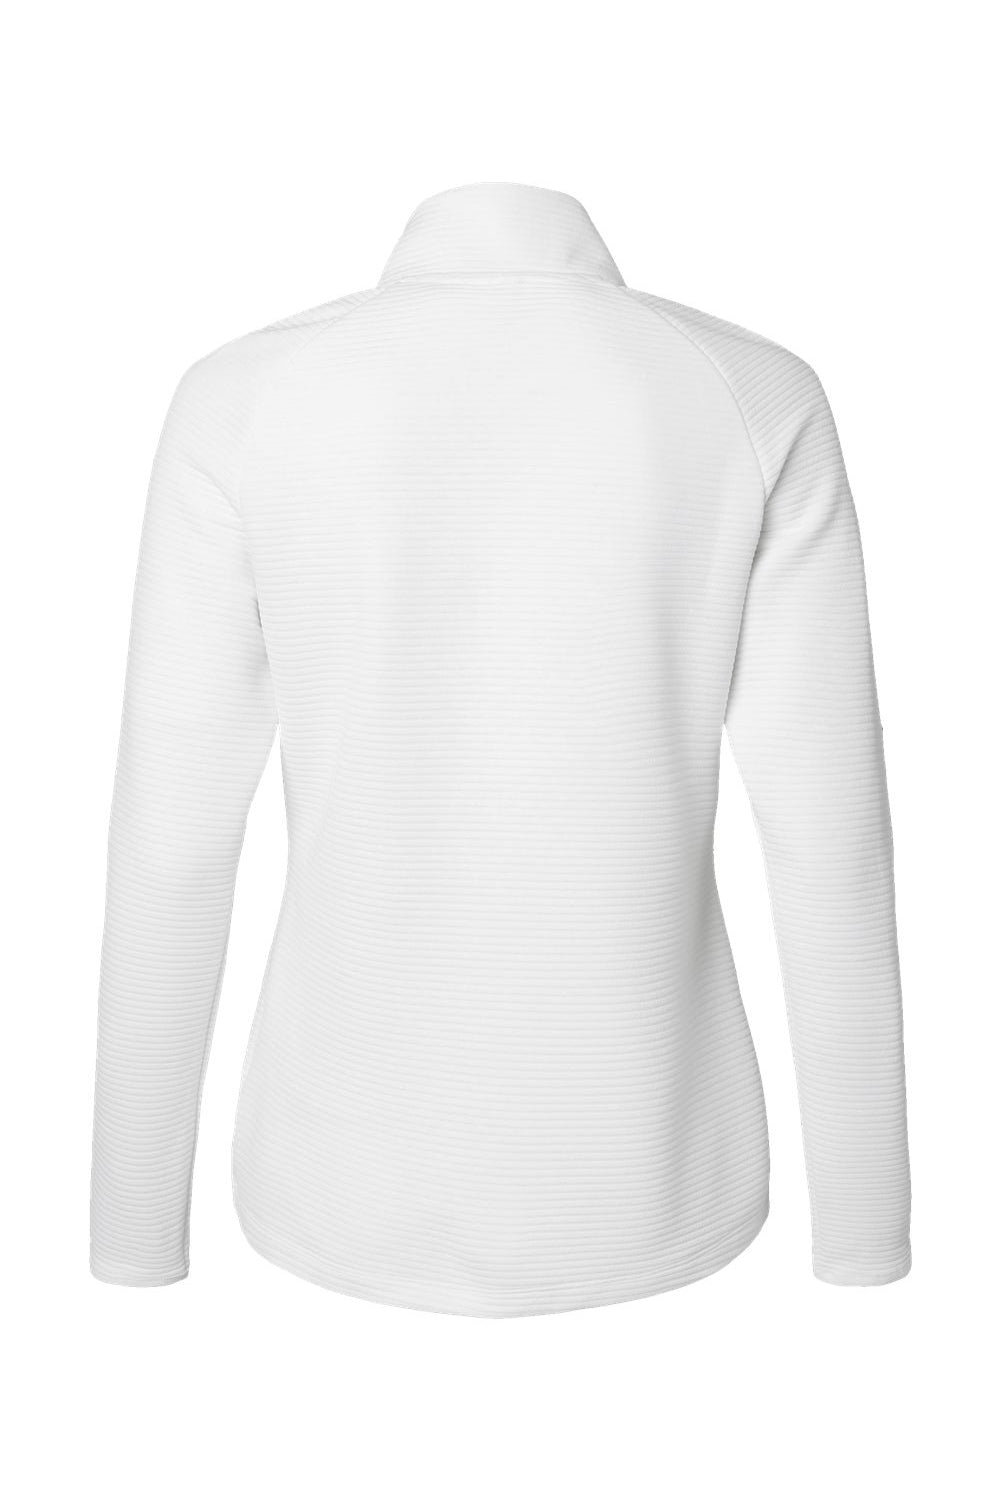 Adidas A589 Womens Spacer 1/4 Zip Sweatshirt Core White Flat Back